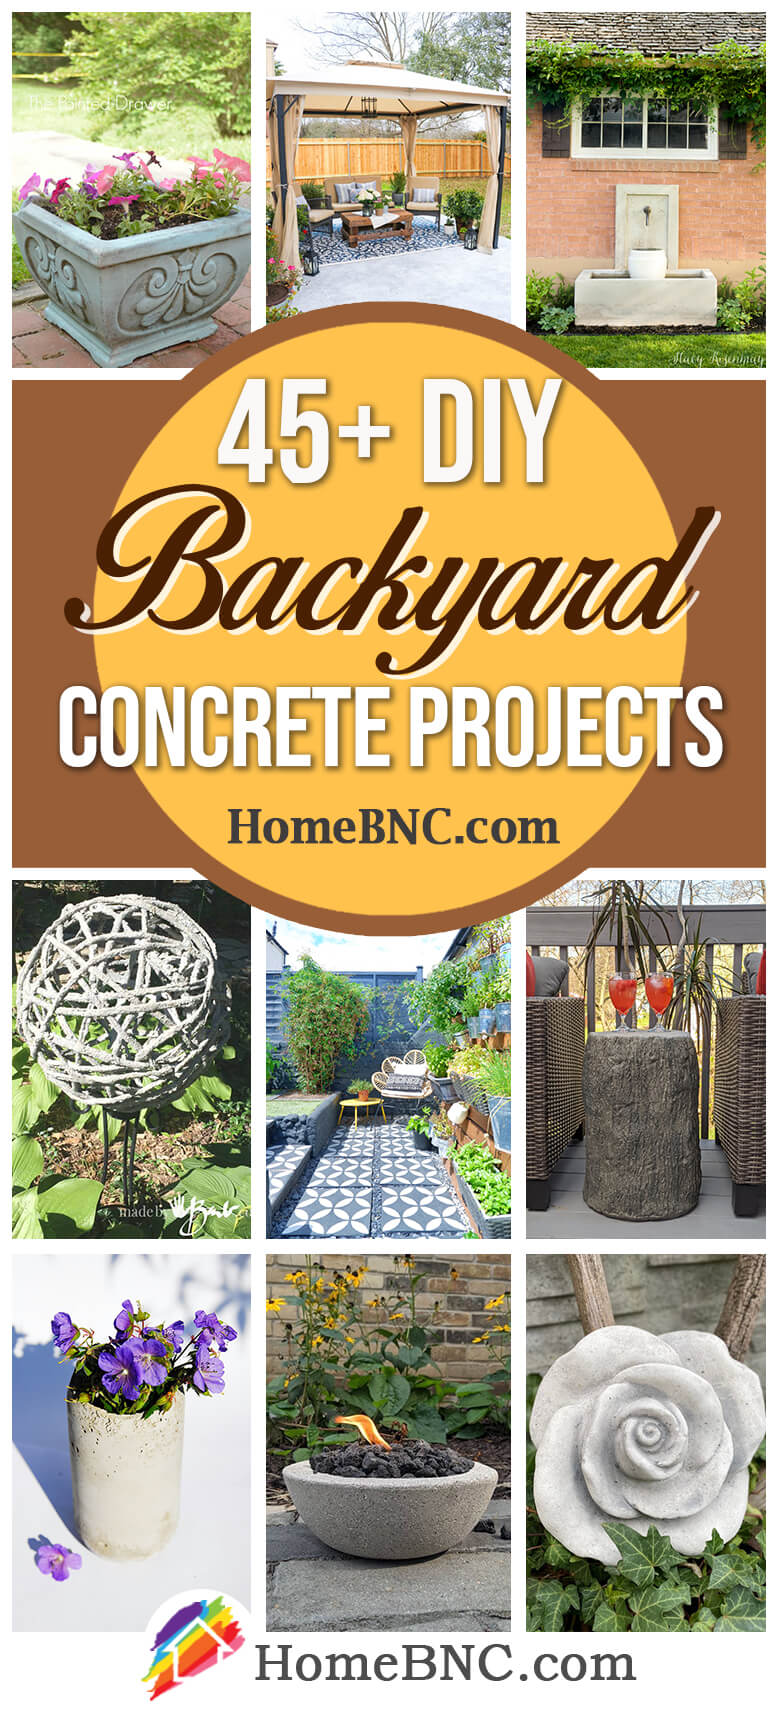 DIY Backyard Concrete Projects